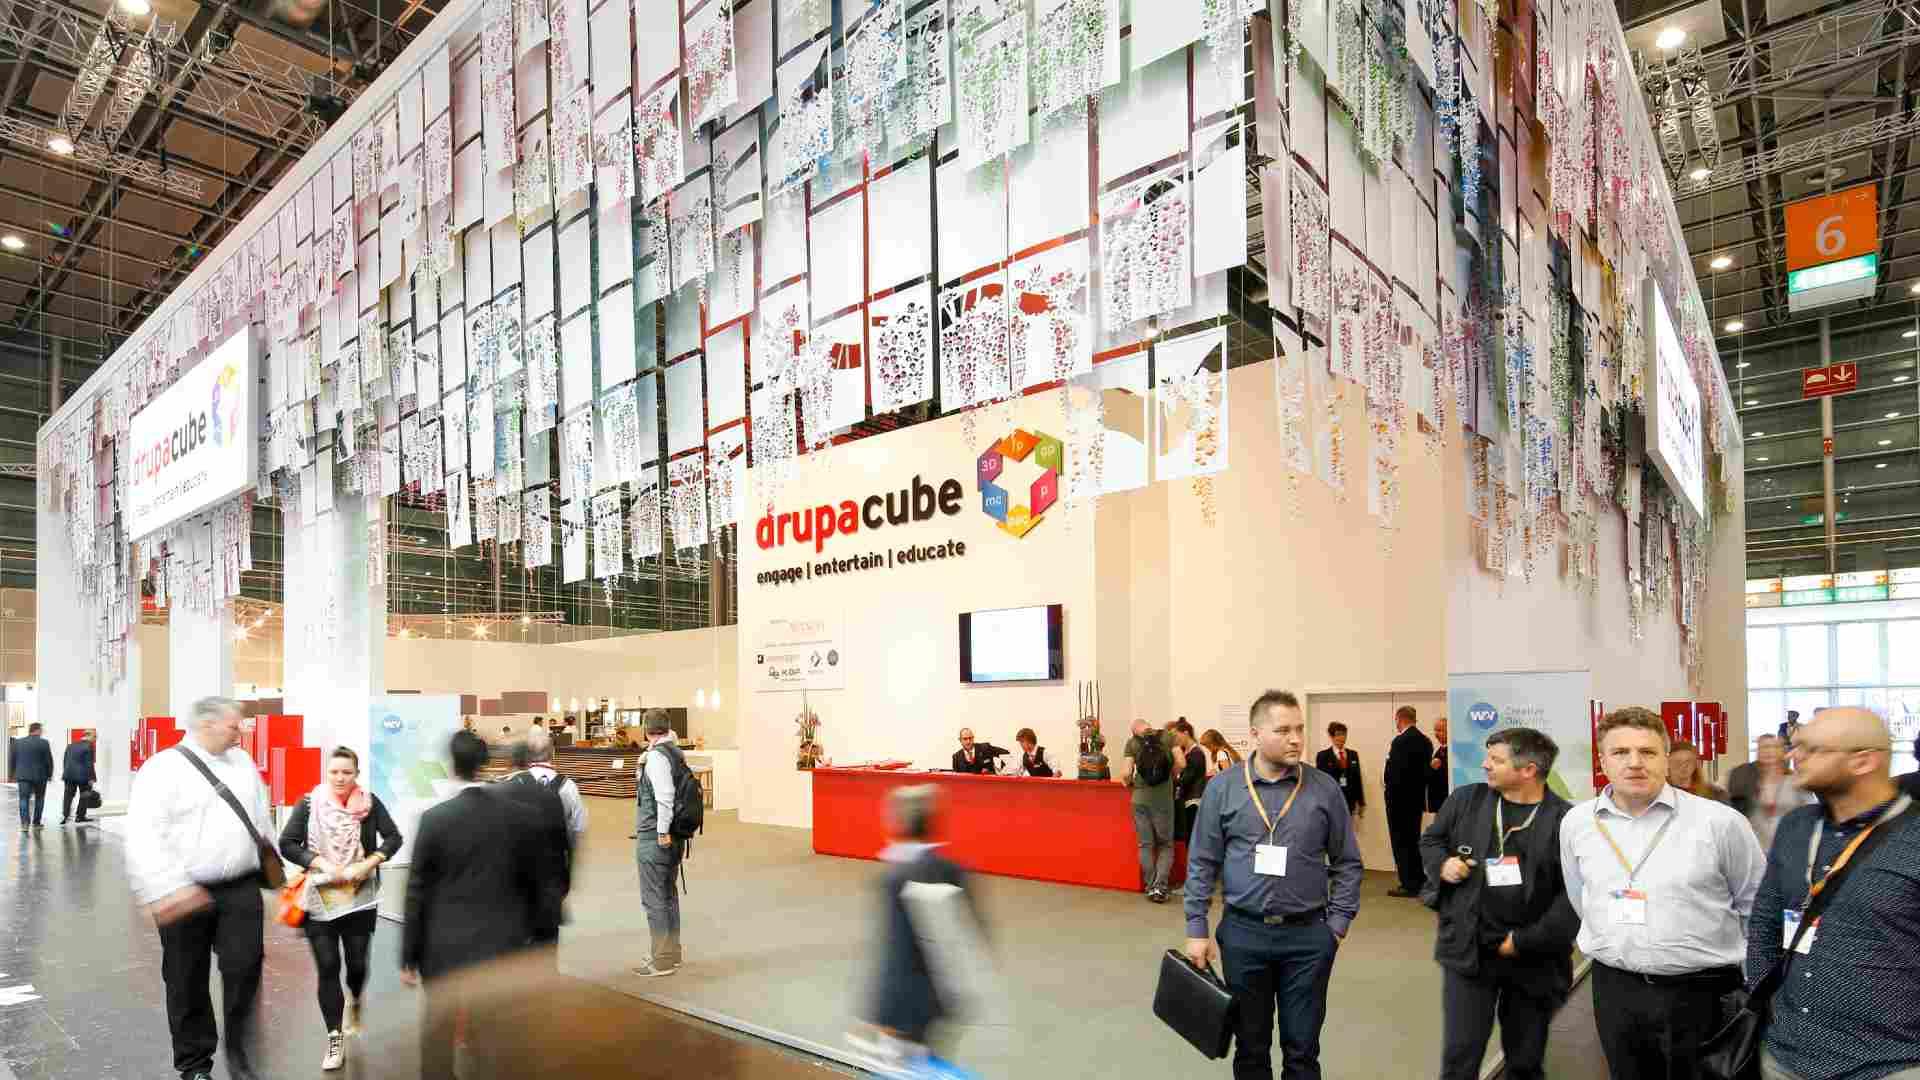 The drupa cube at drupa 2016